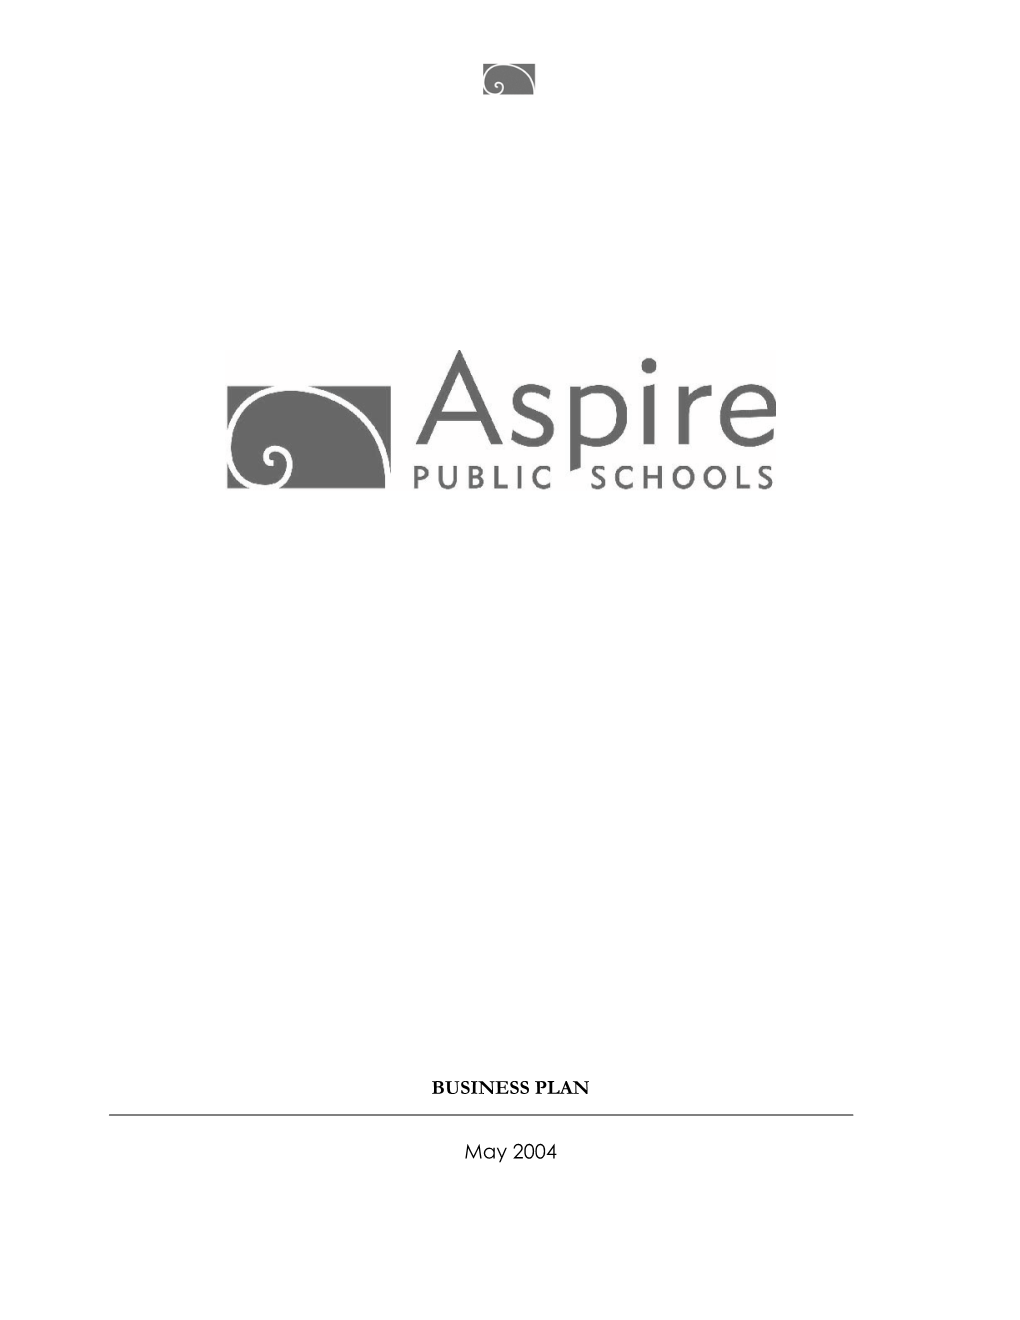 Aspire Public Schools Business Plan